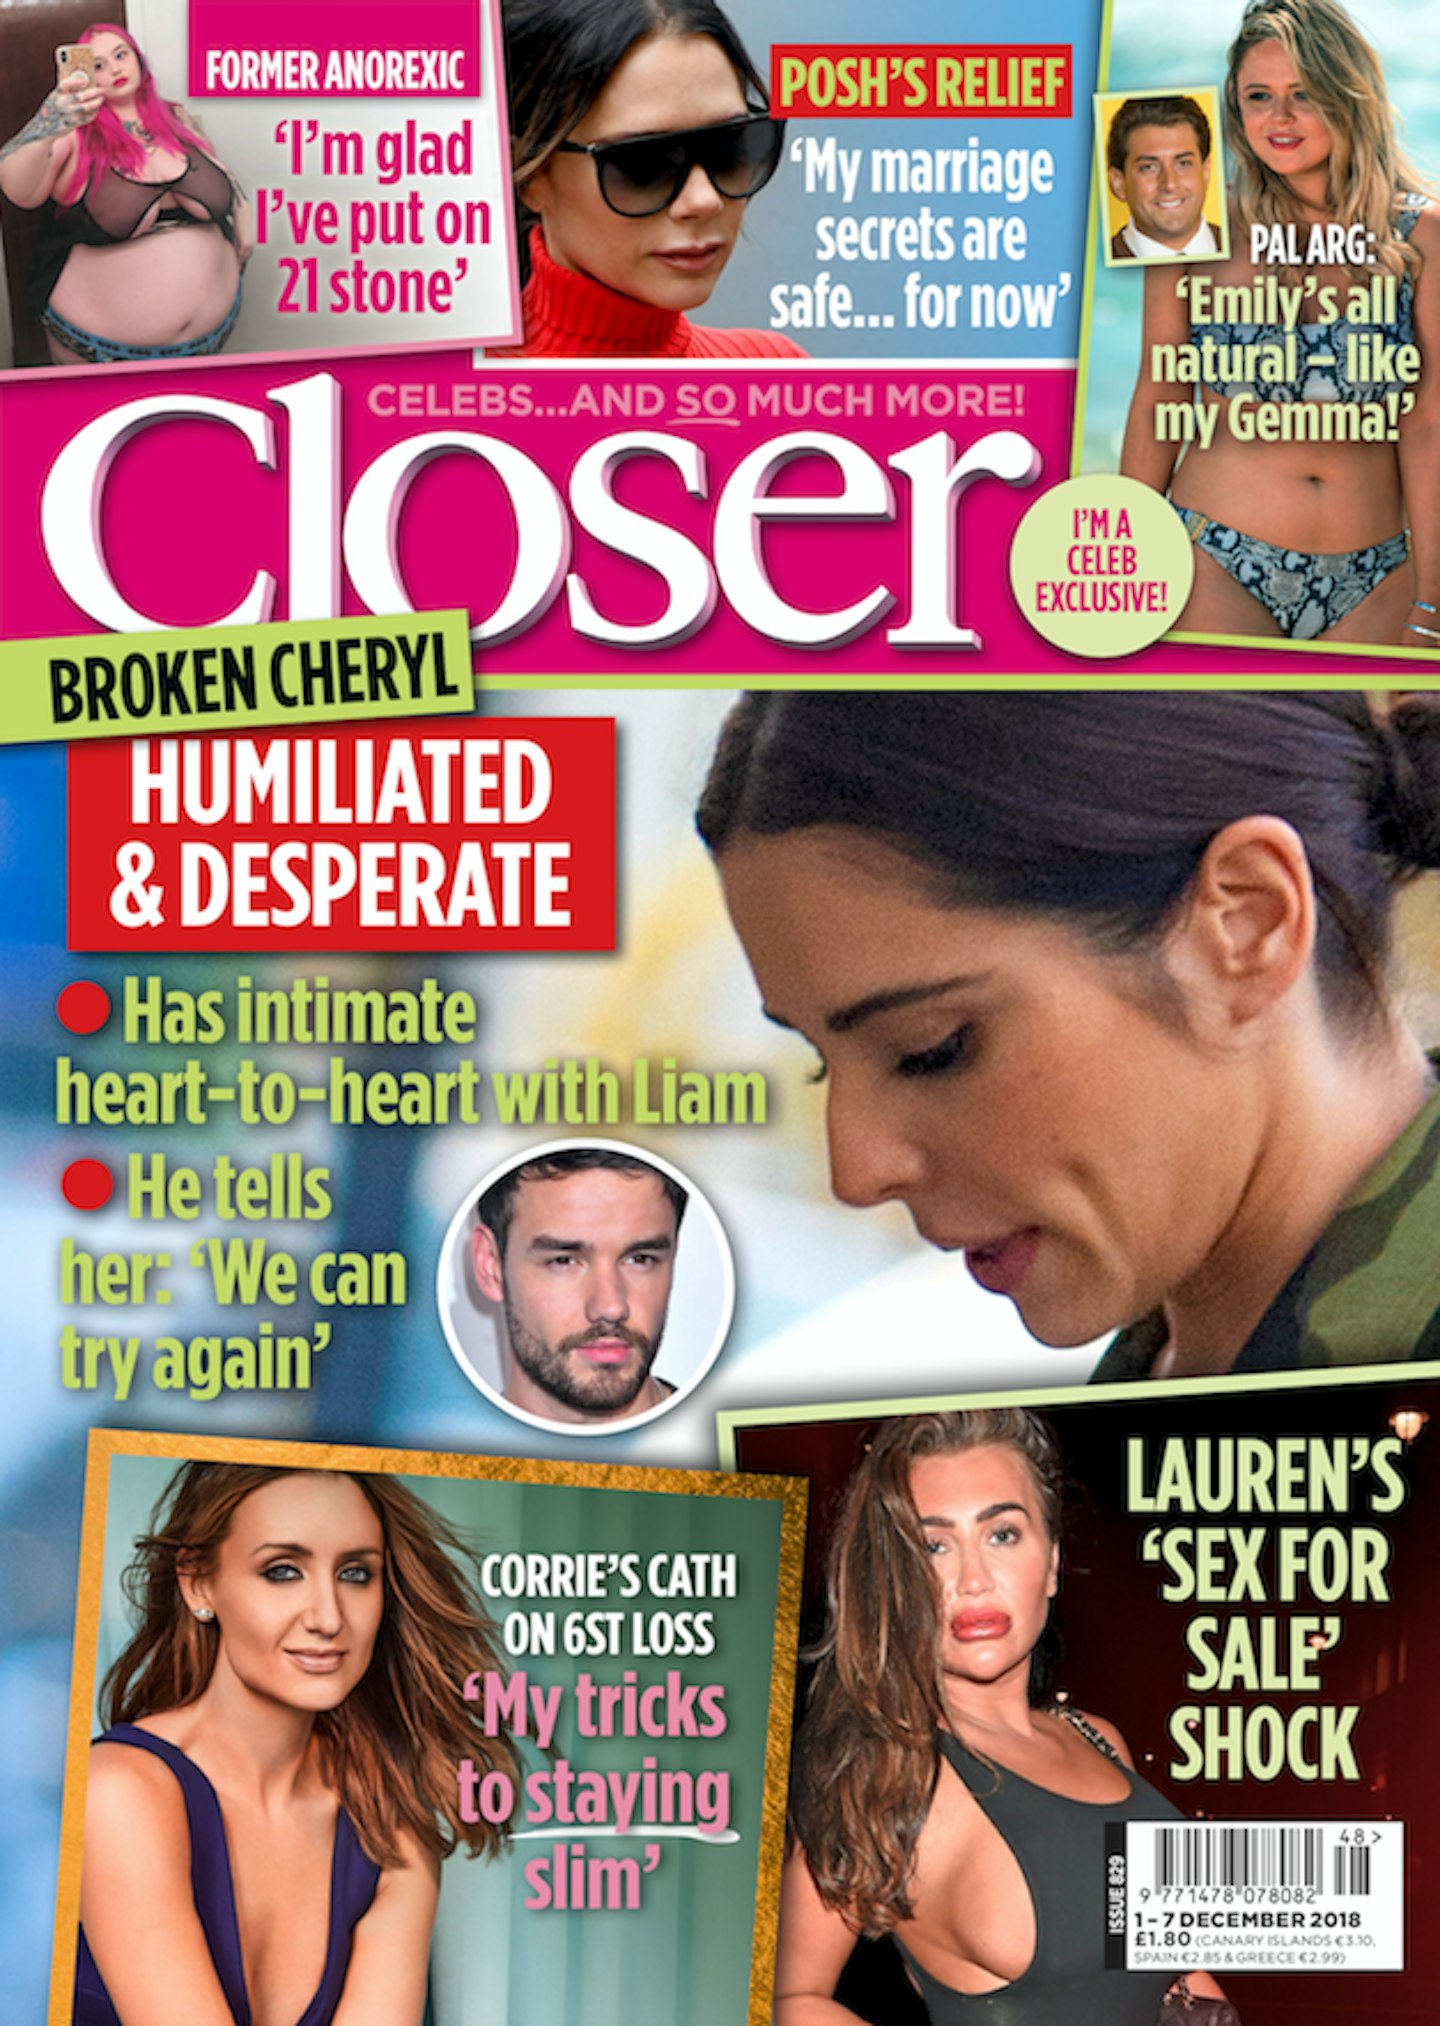 Closer magazine issue 829